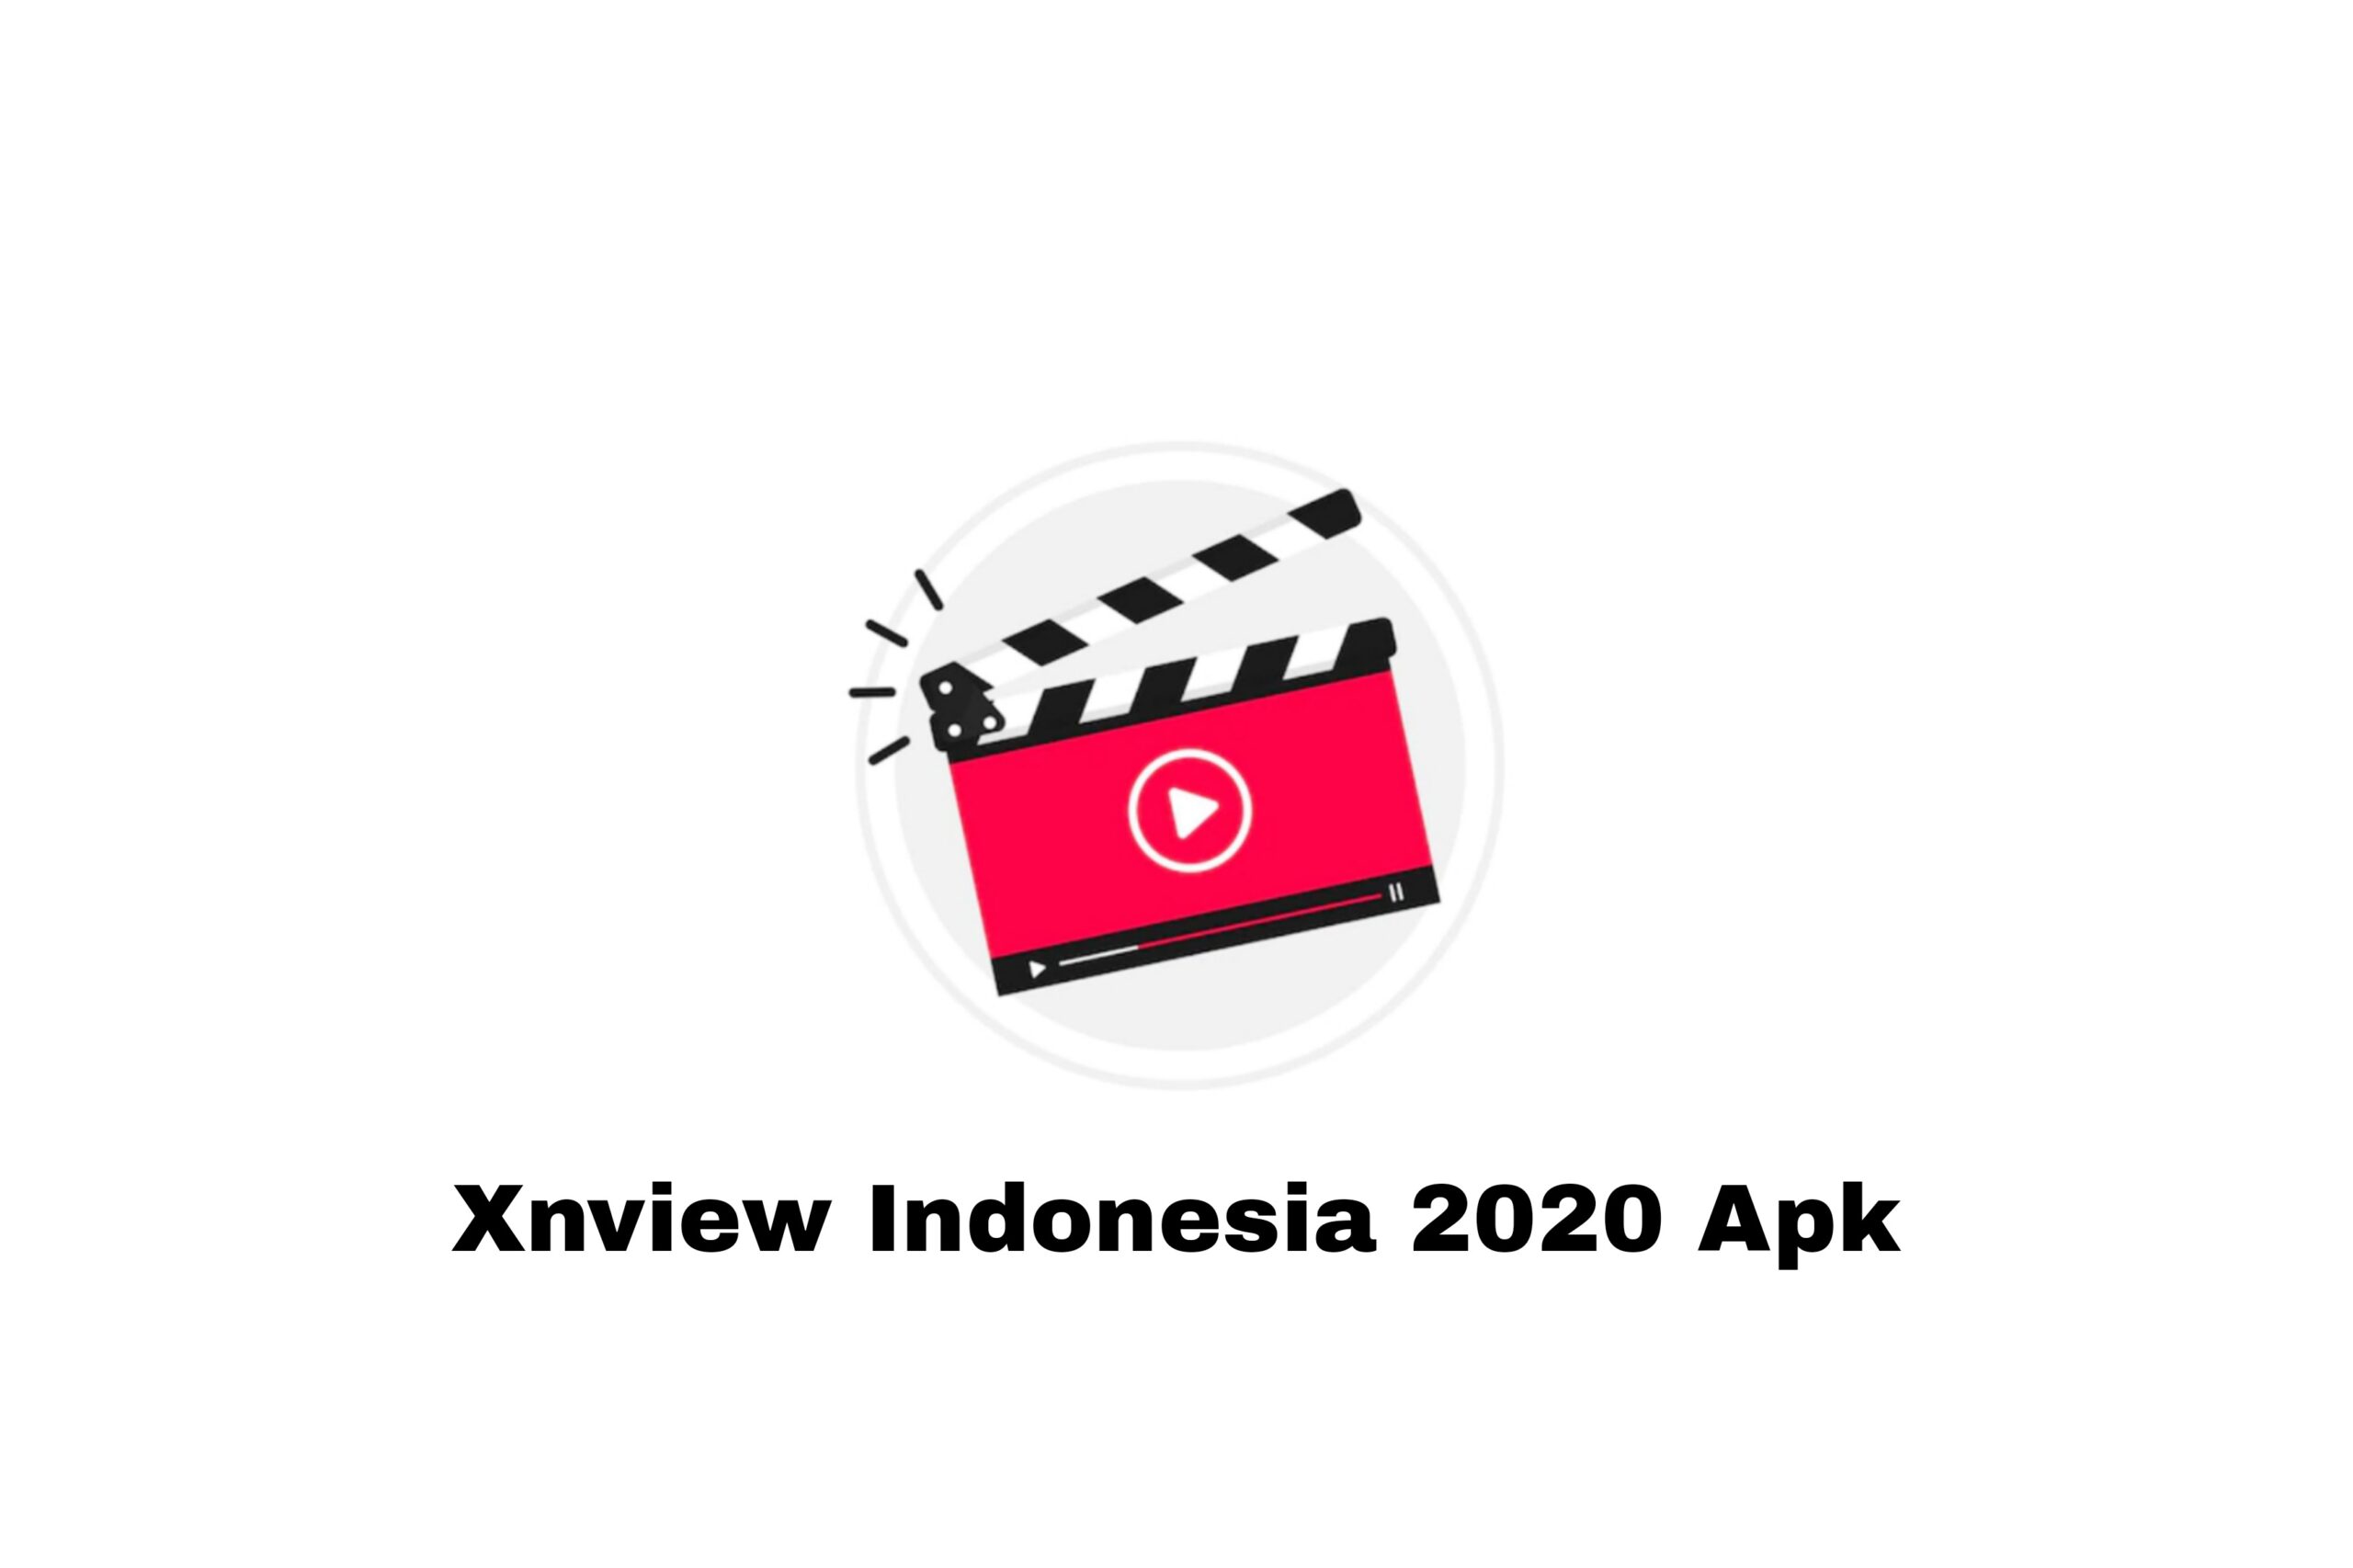 Xnview Indonesia 2020 Apk